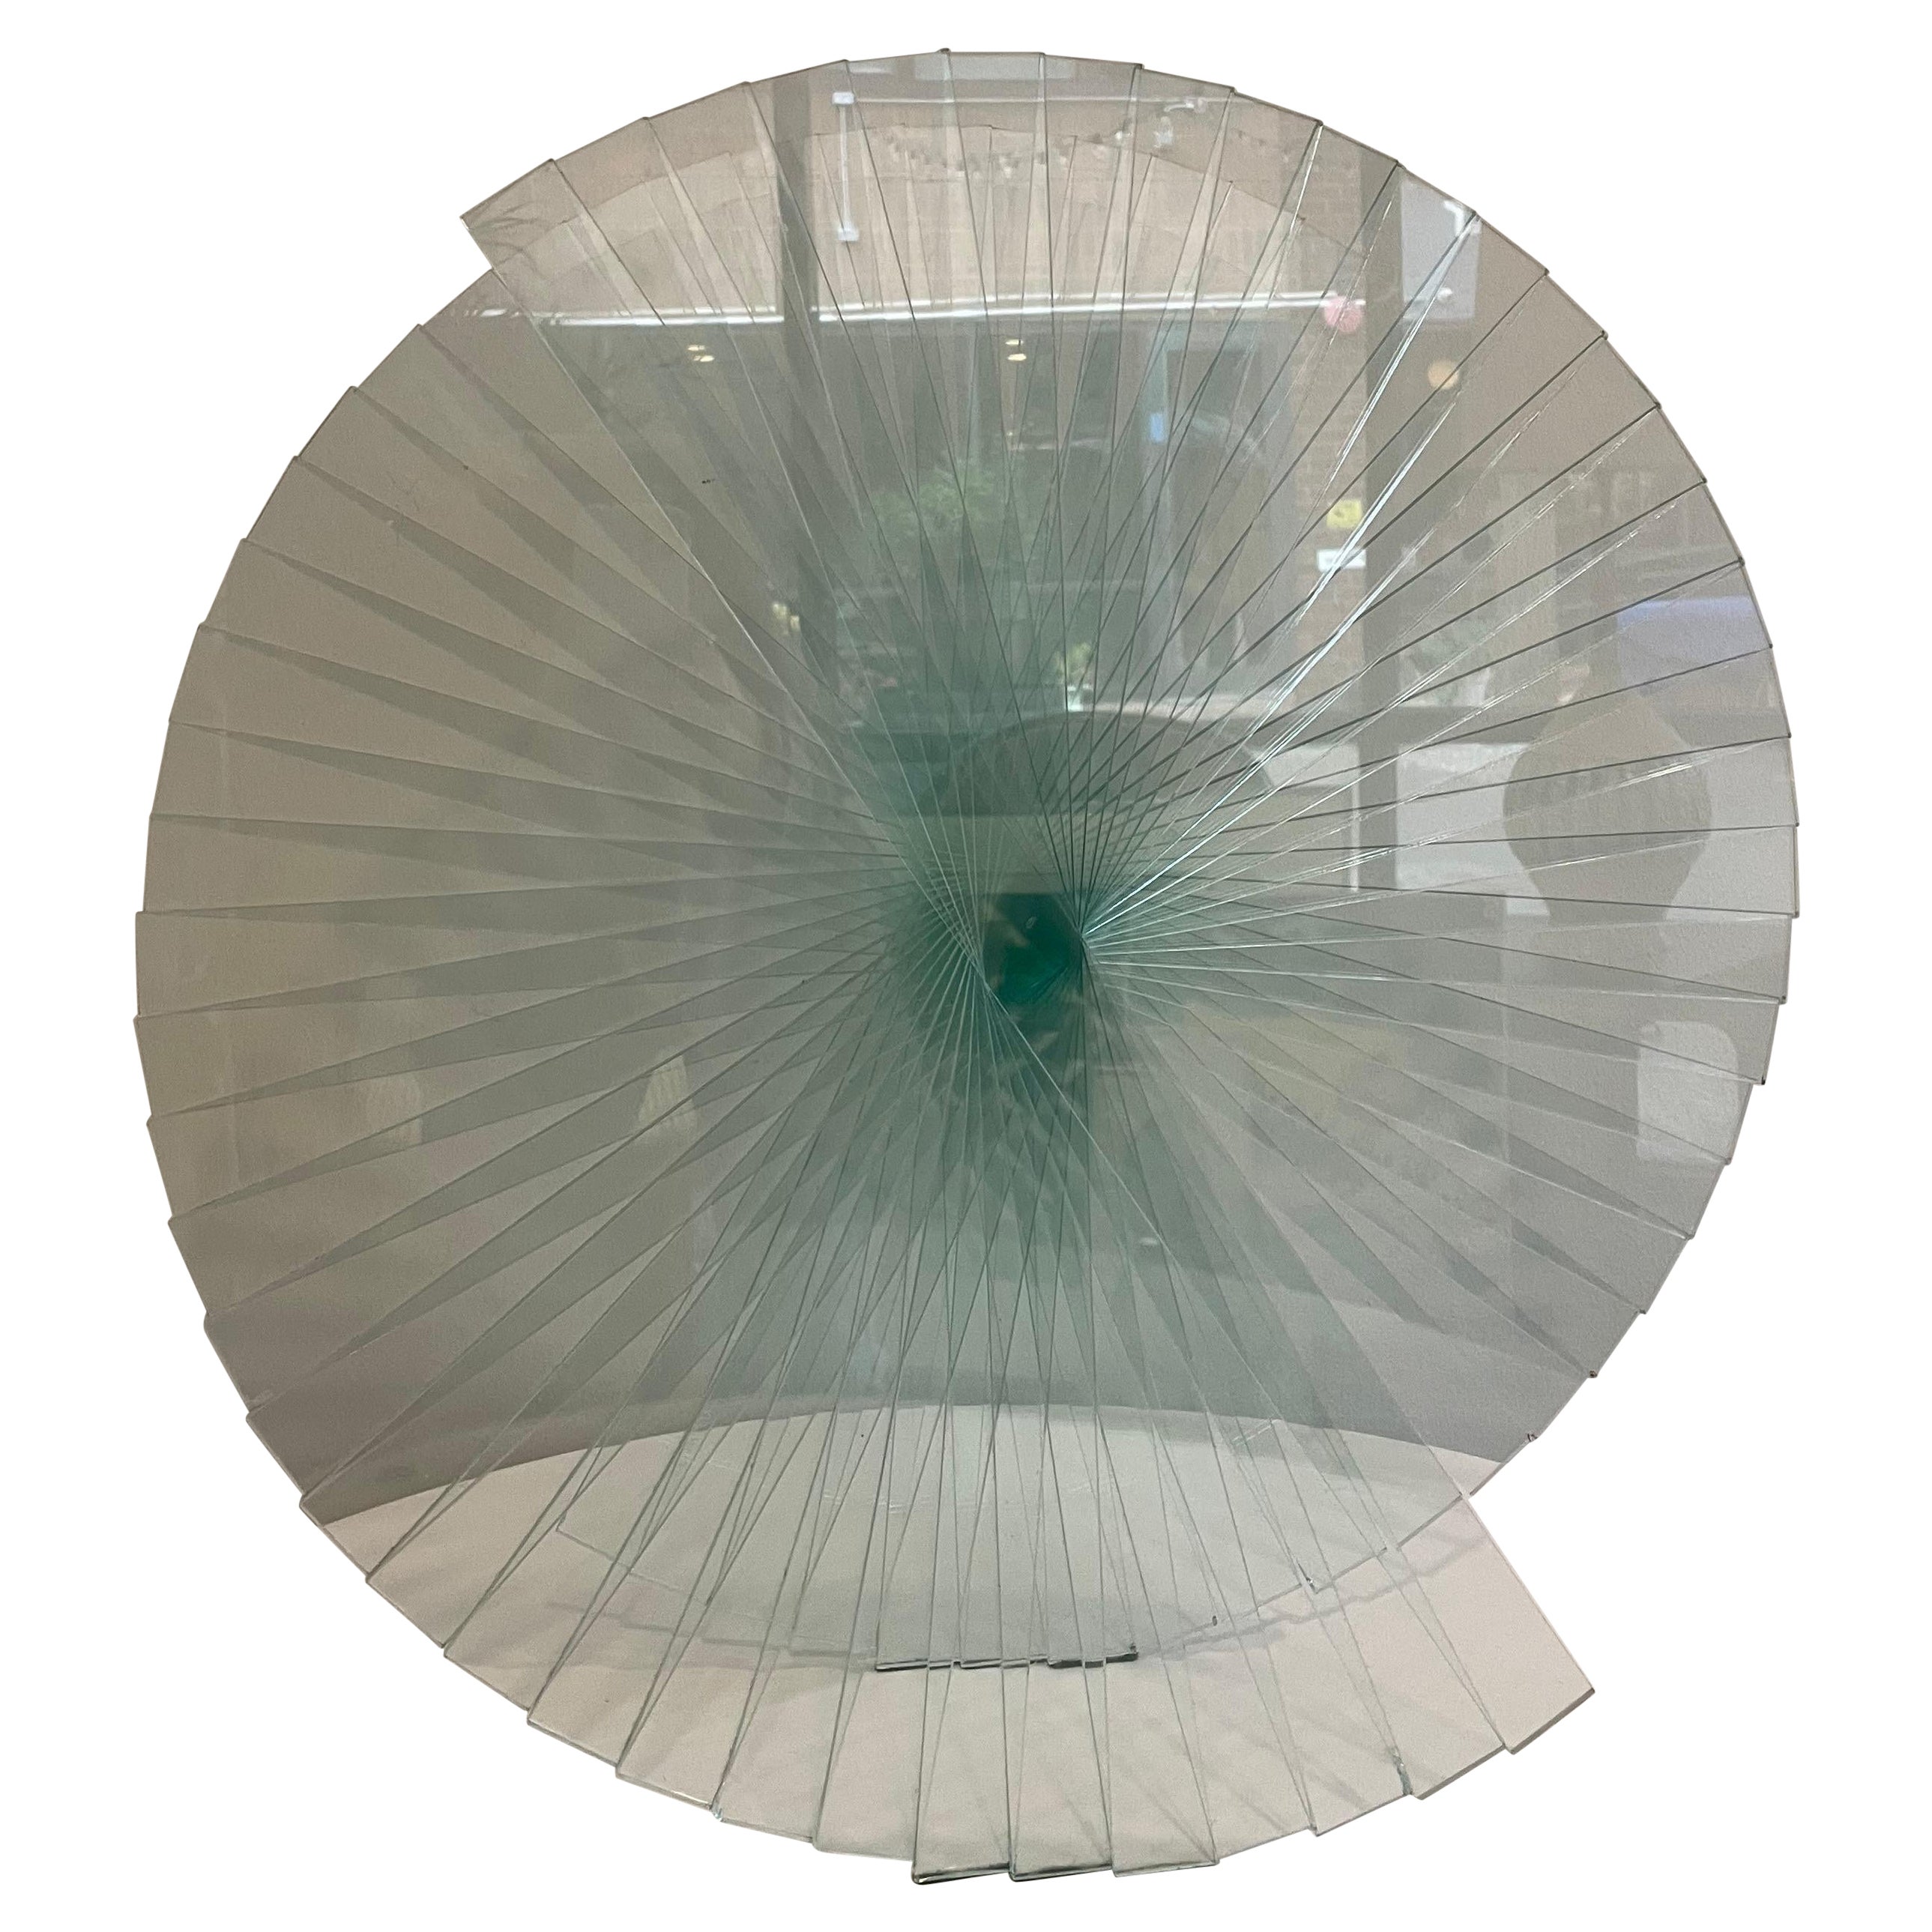 Runstadler Studios "Spiral Motion" Glass Sculpture For Sale